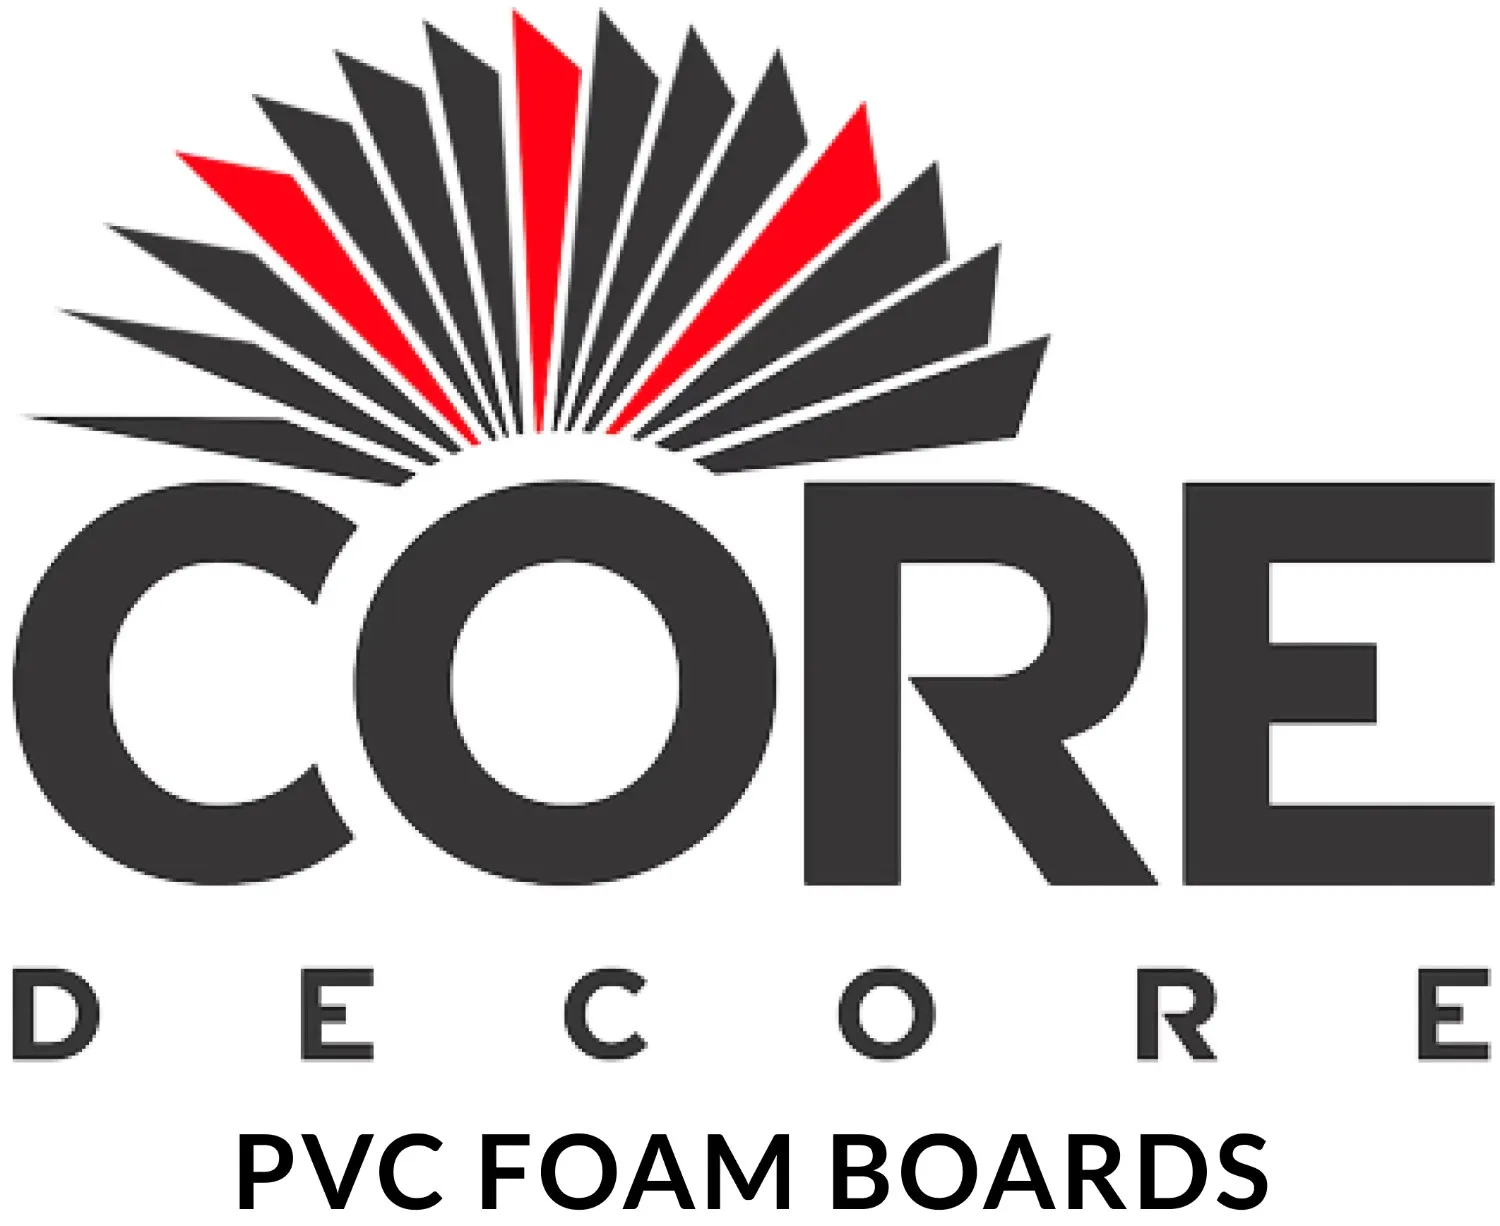 Chopra groups pvc form boards logo